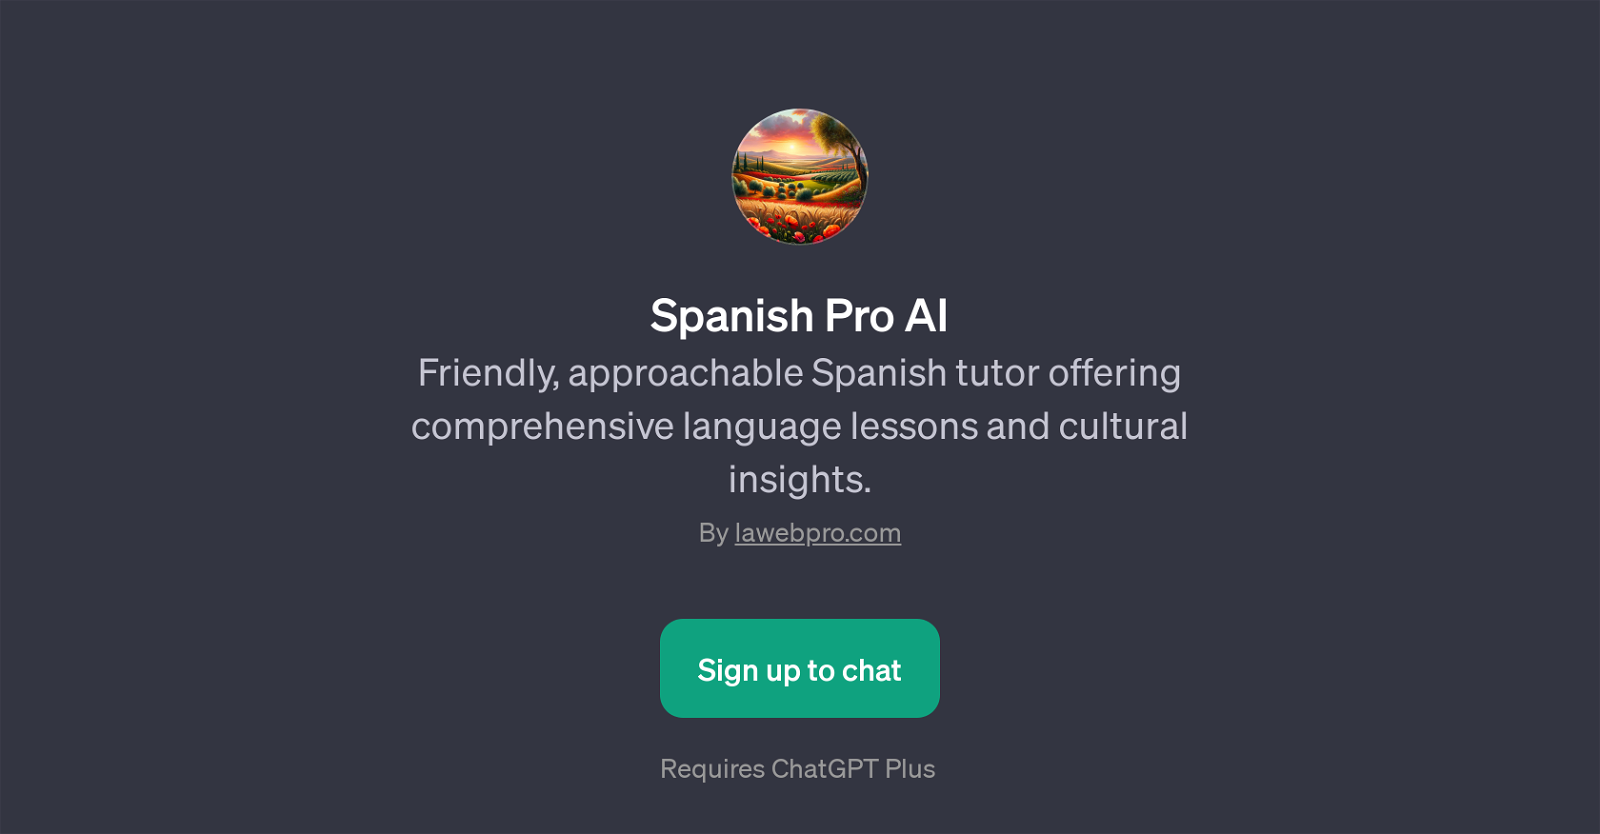 Spanish Pro AI website